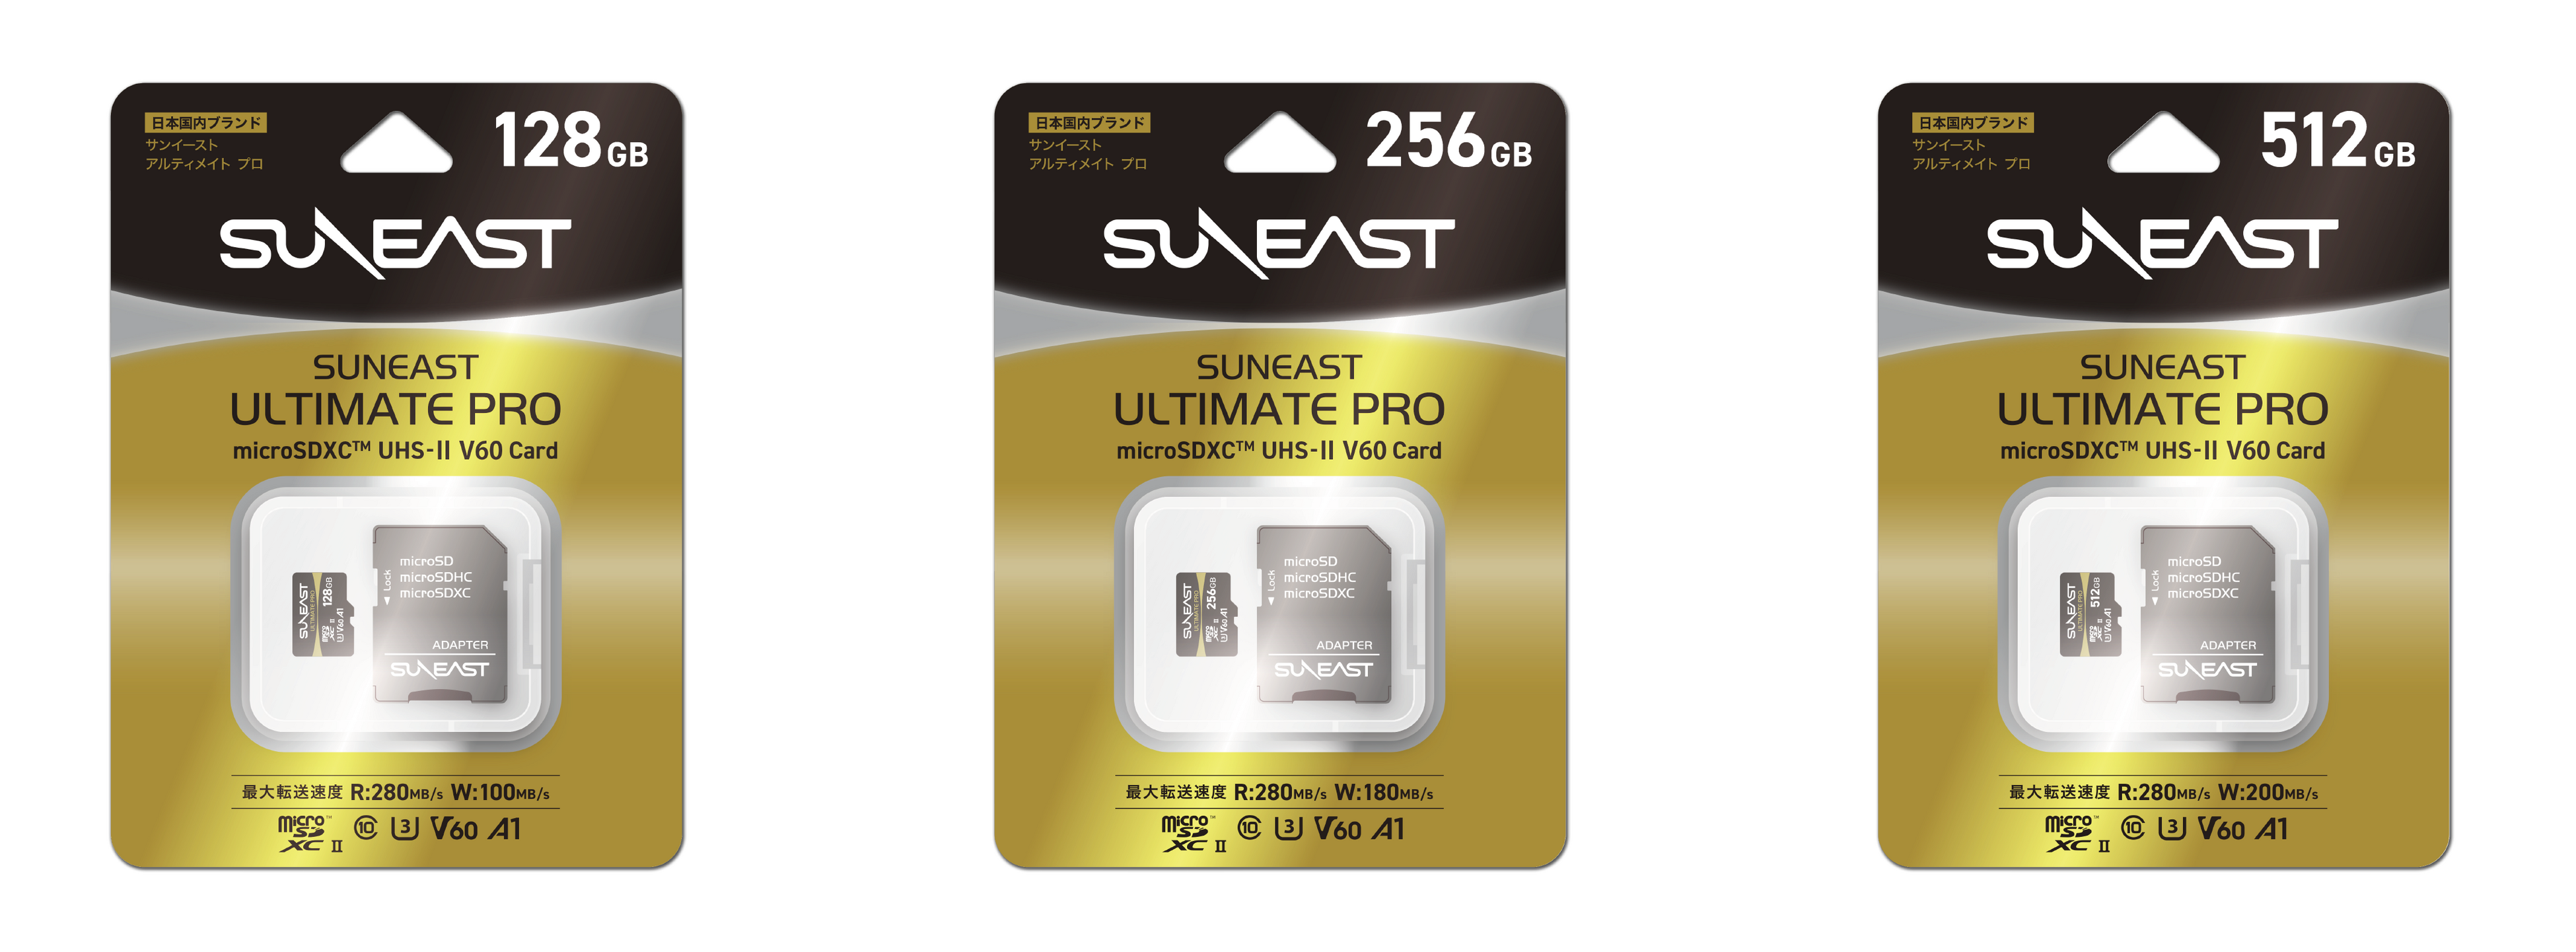 SUNEAST、VPG400規格対応のCFexpress Type B、SDXC UHS-II V60、microSDXC UHS-II V60を7月中旬より新発売